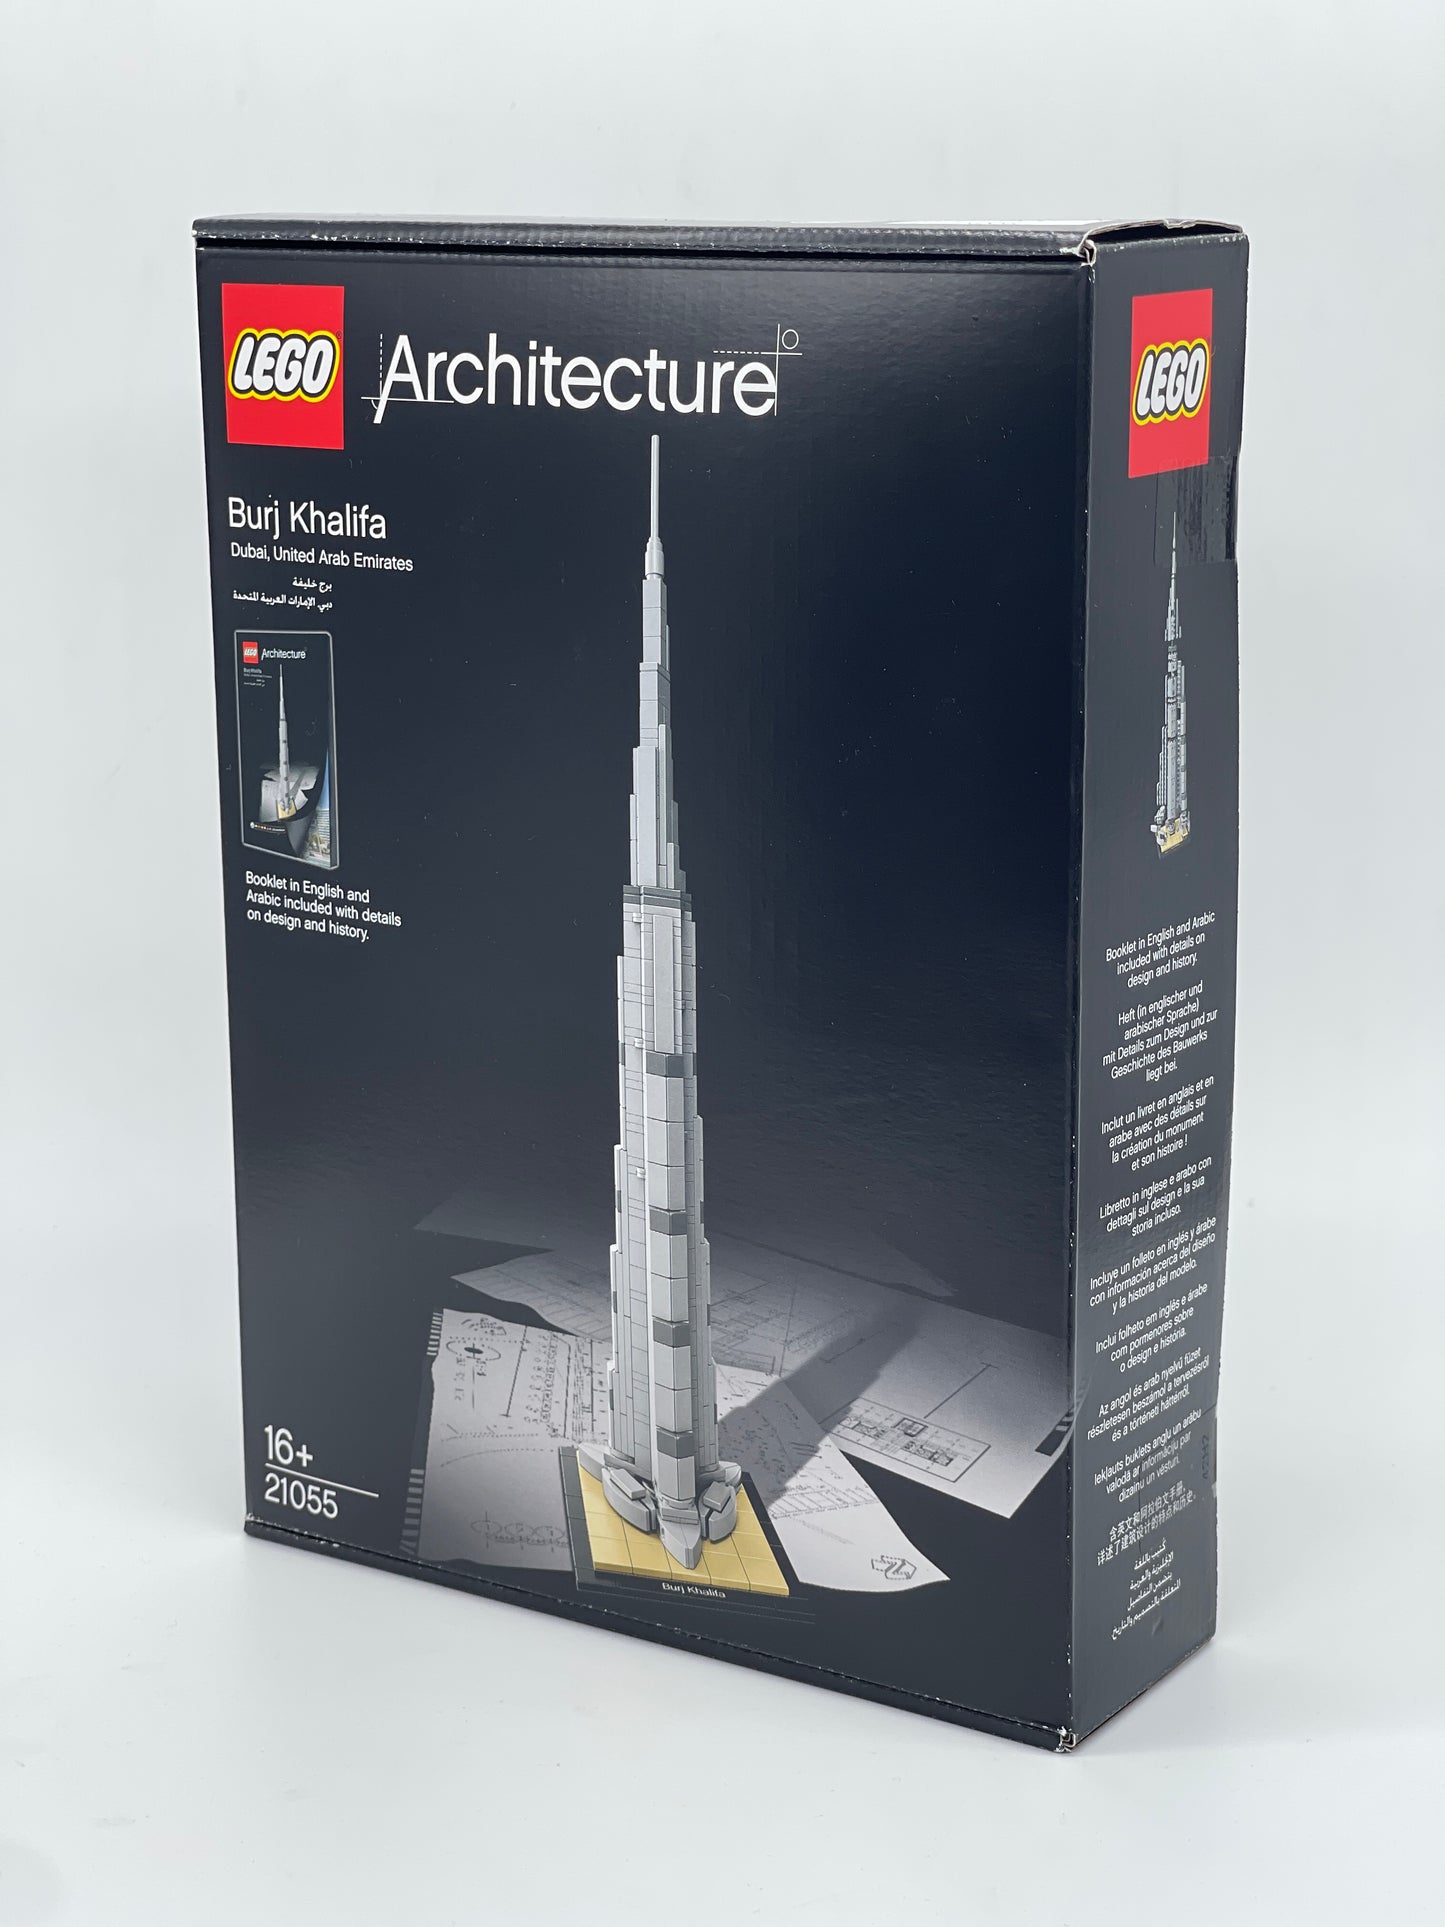 LEGO Architecture "Burj Khalifa" Emirates UAE Exclusive #21055